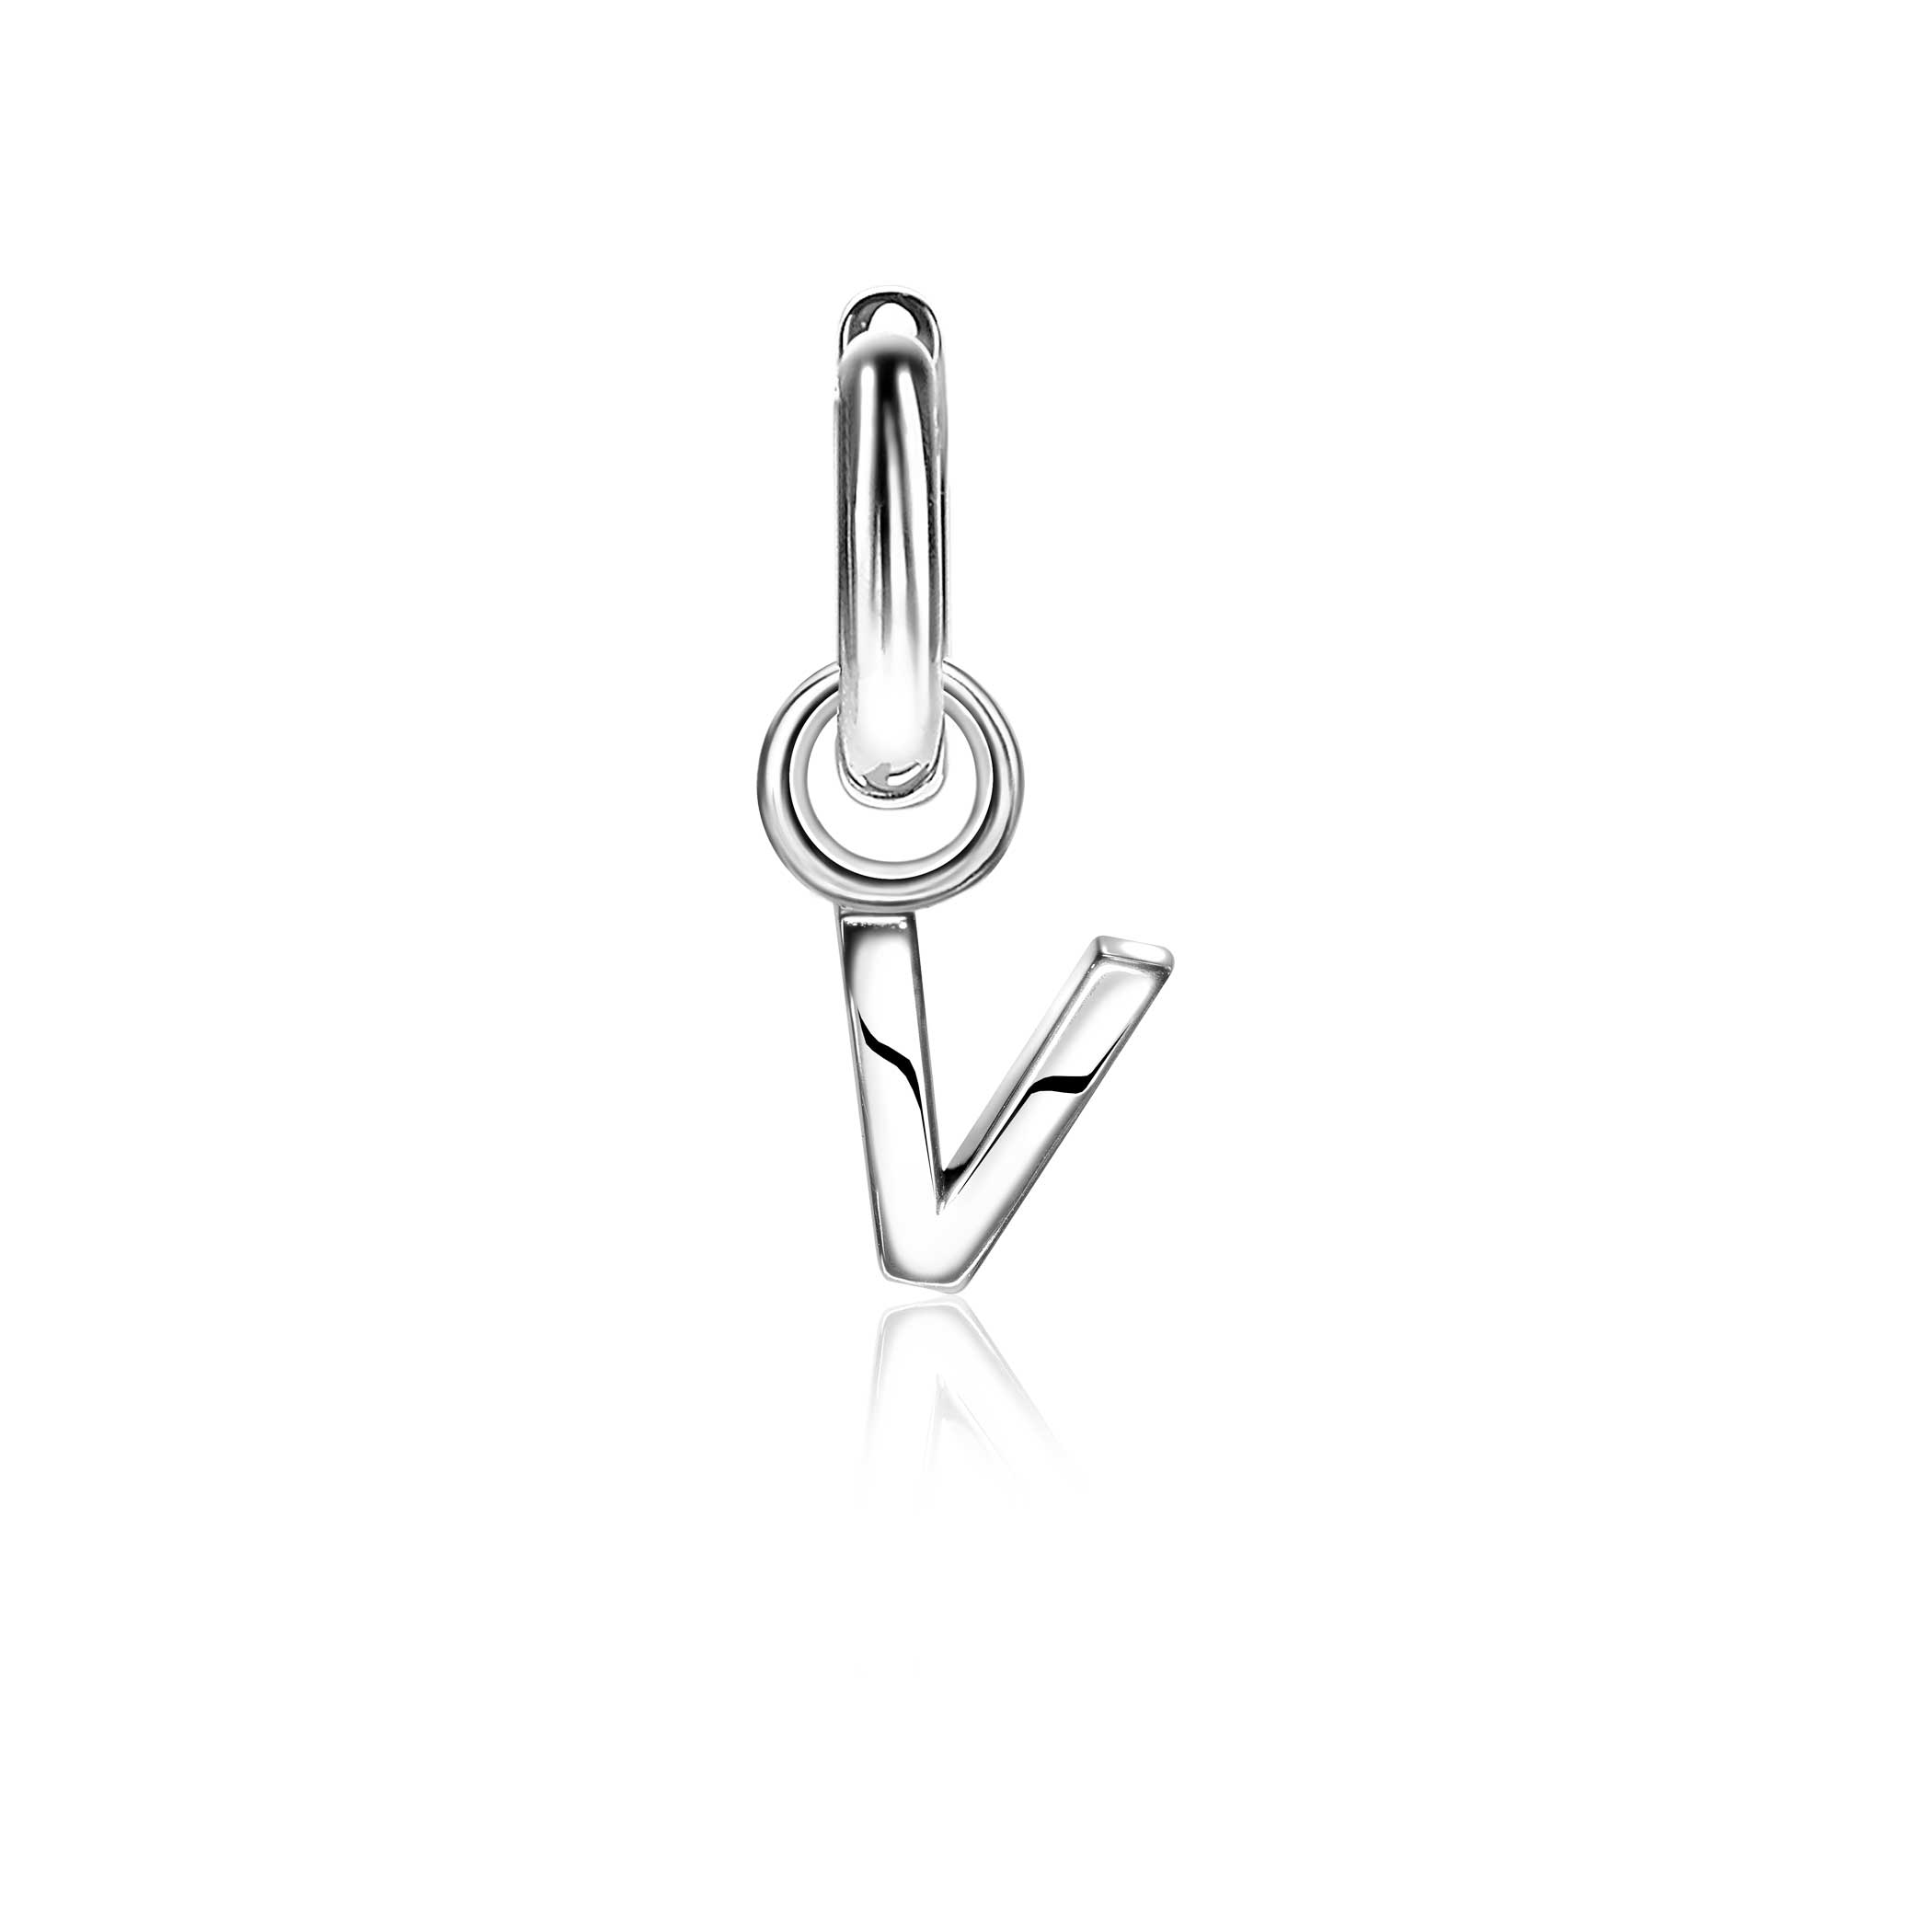 ZINZI Sterling Silver Letter Earrings Pendant V price per piece ZICH2144V (excl. hoop earrings)